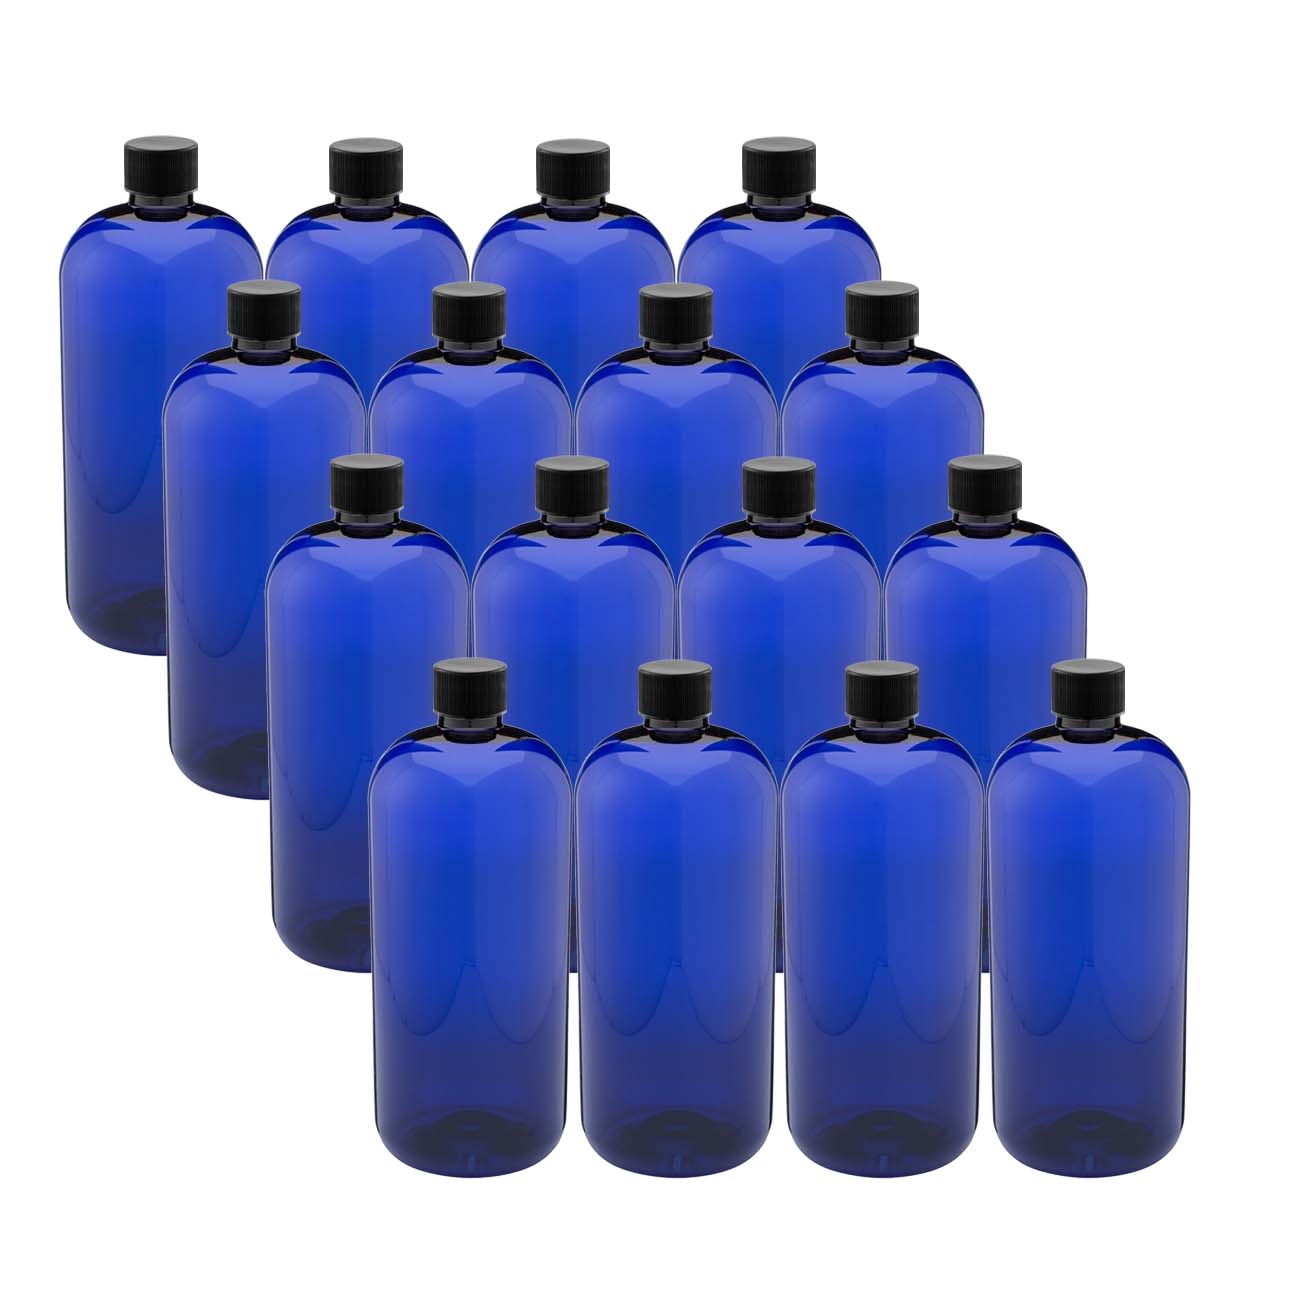 16 ounce cobalt blue containers (16 count PET plastic)